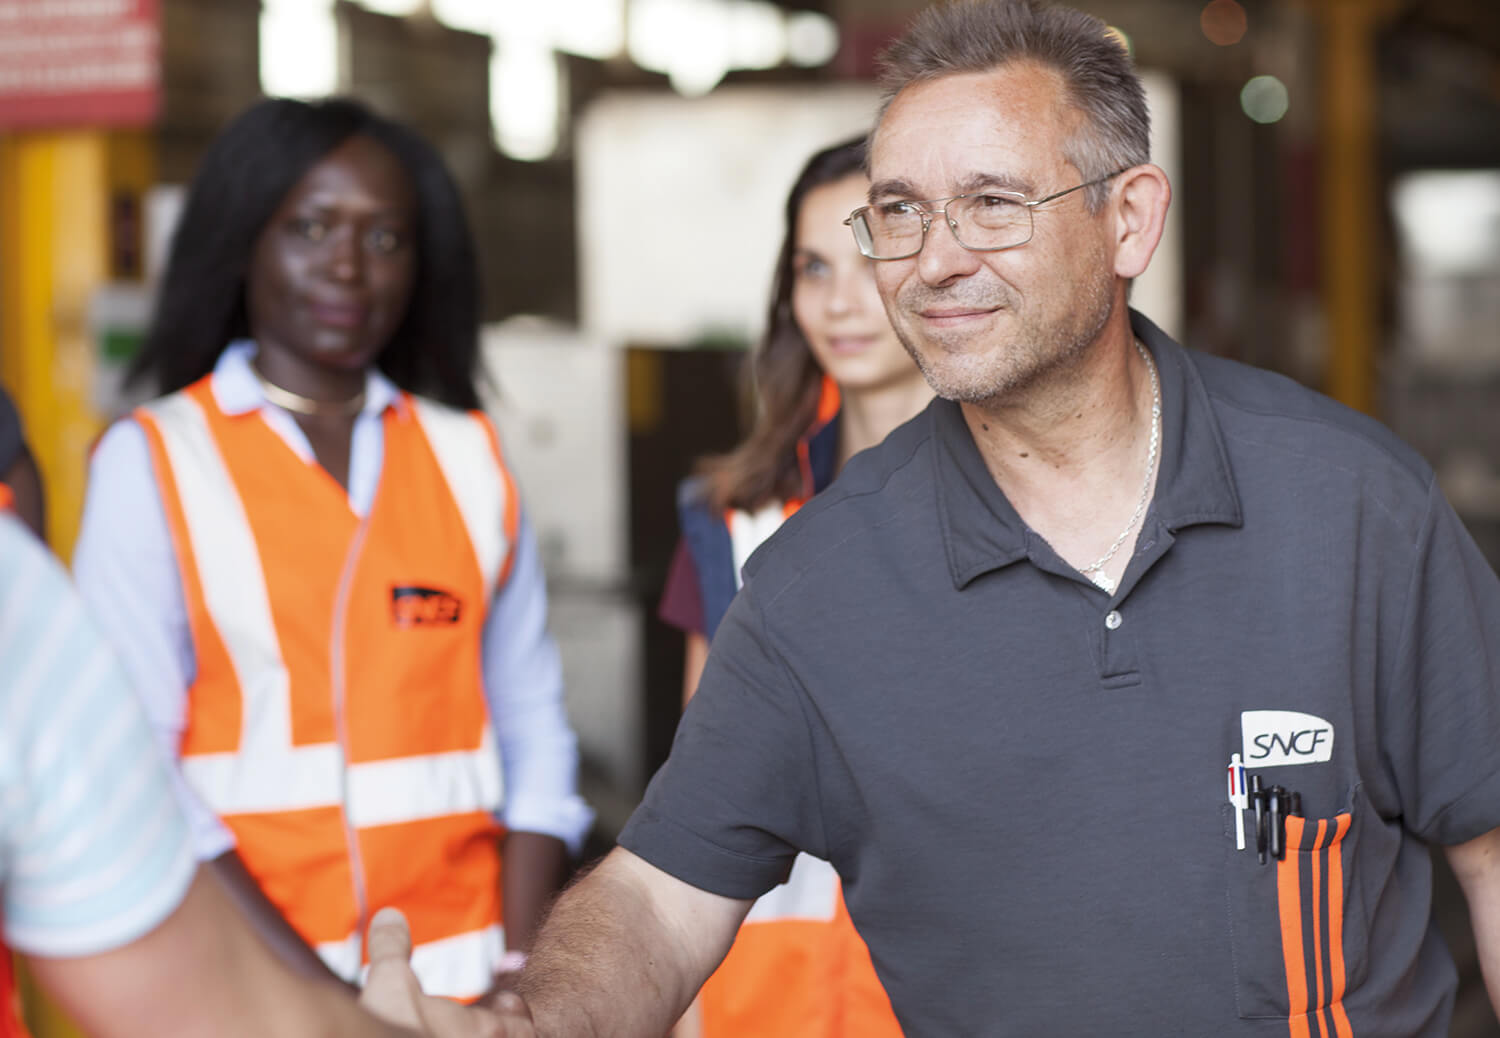 Deux employés de la SNCF se serrant la main